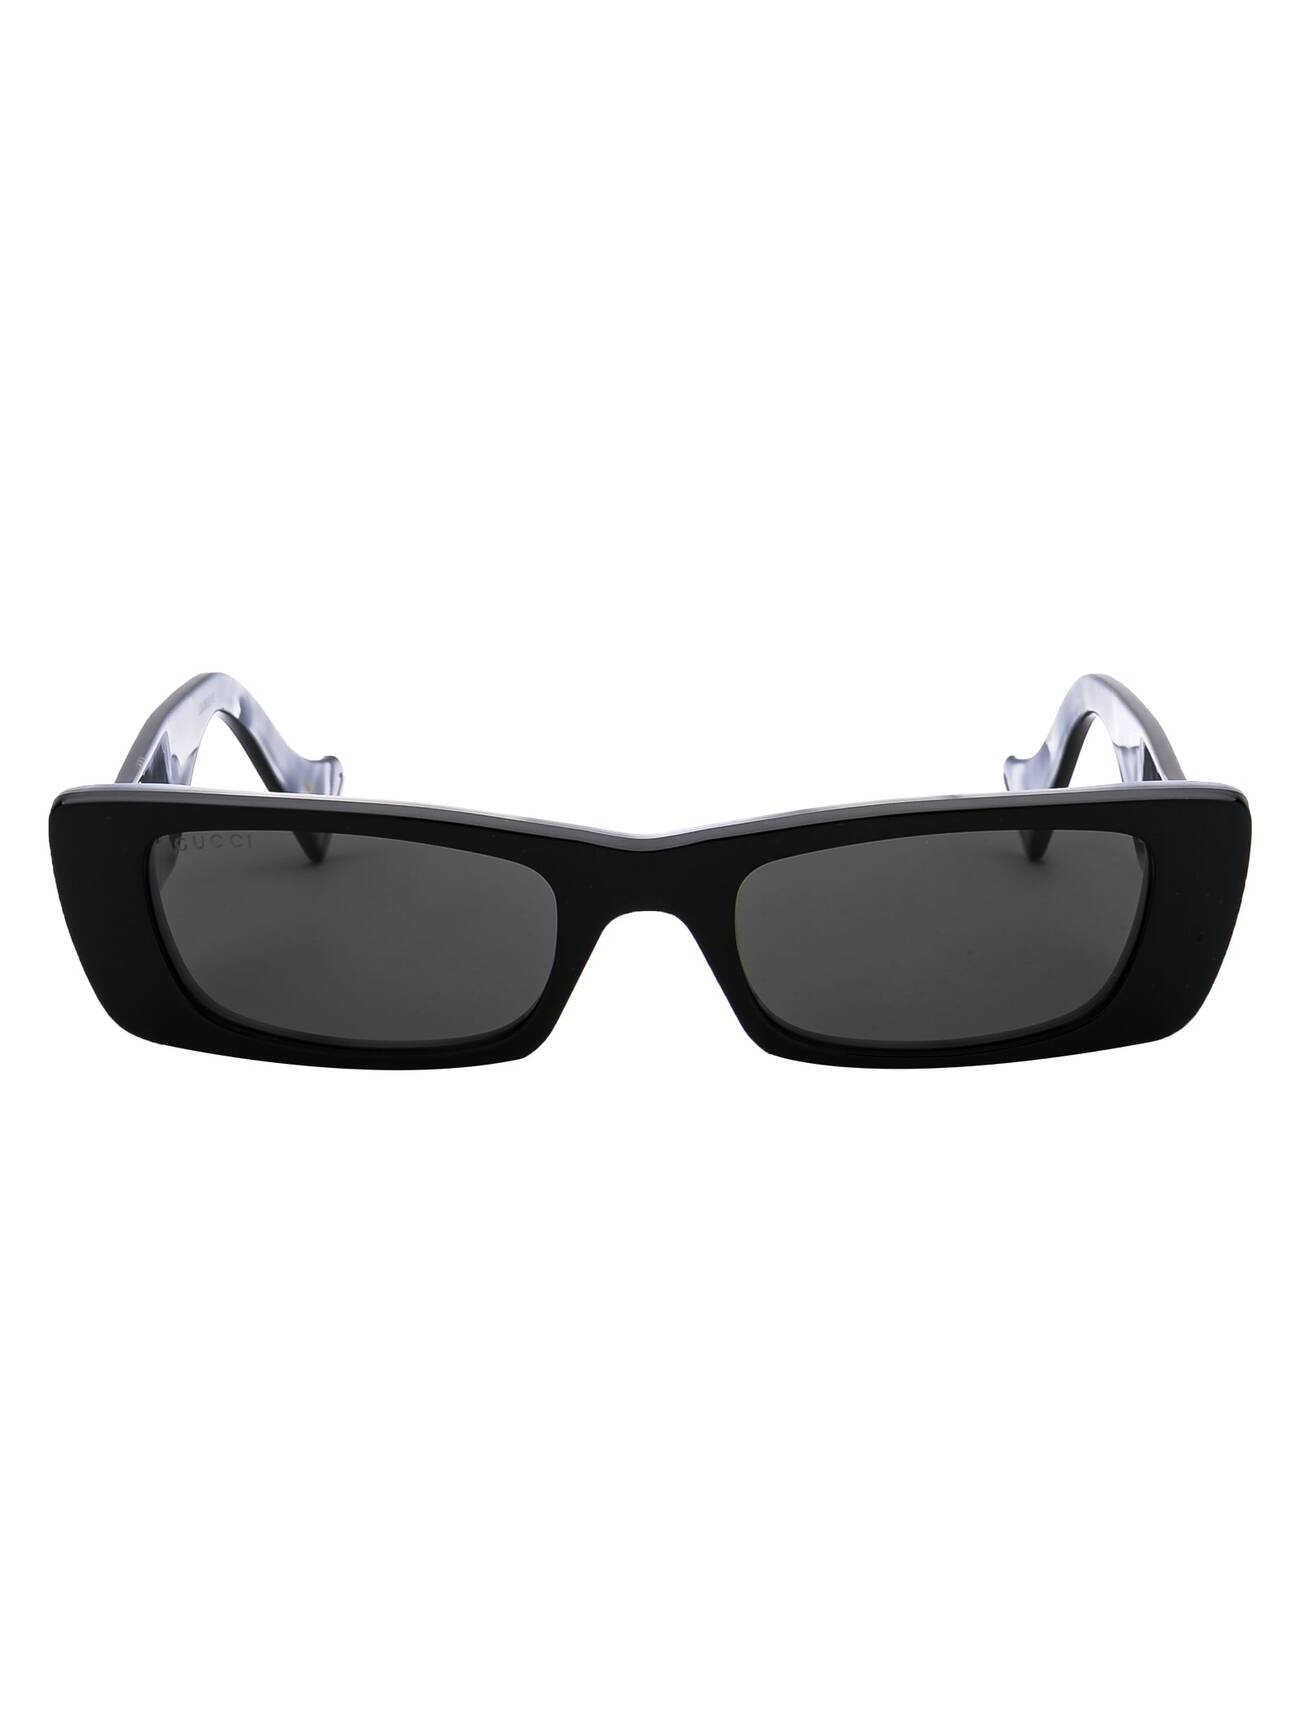 Gucci Eyewear Gg0516s Sunglasses in black / grey